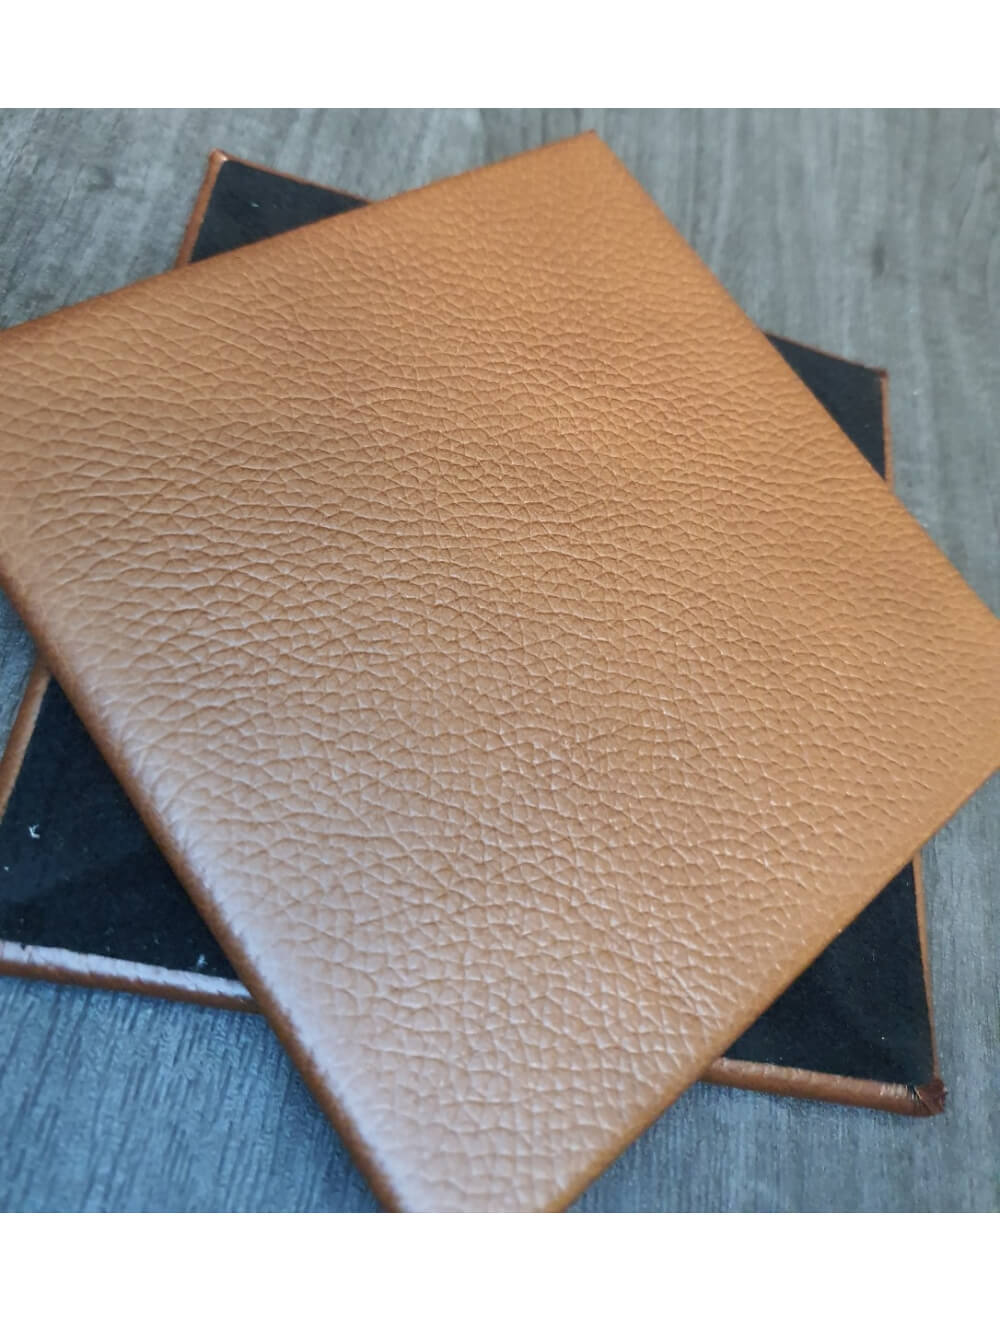 Castagna Shelly Leather Coaster- 10cm Sq (распродажа)